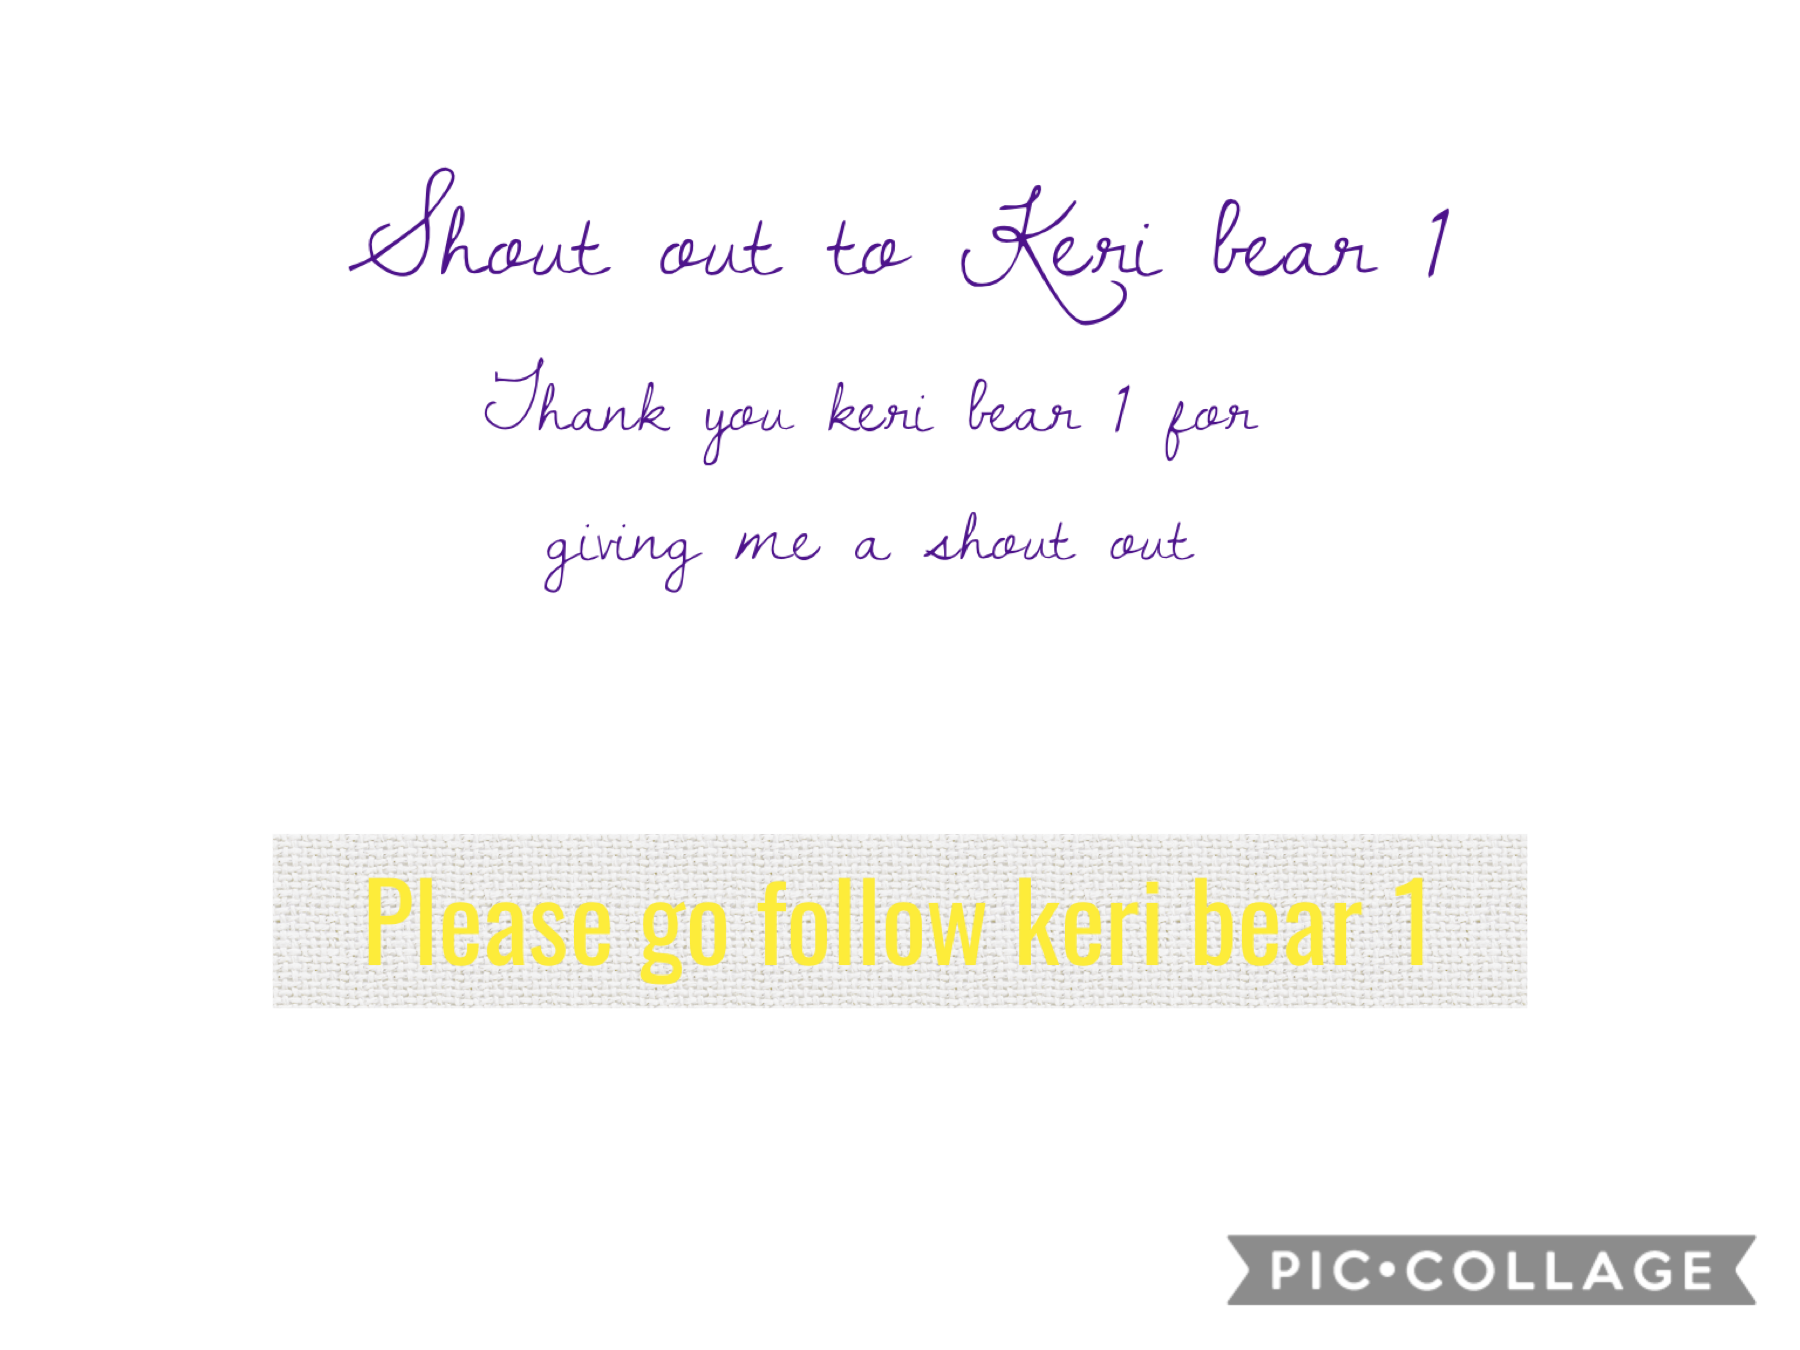 Please go follow keri bear 1